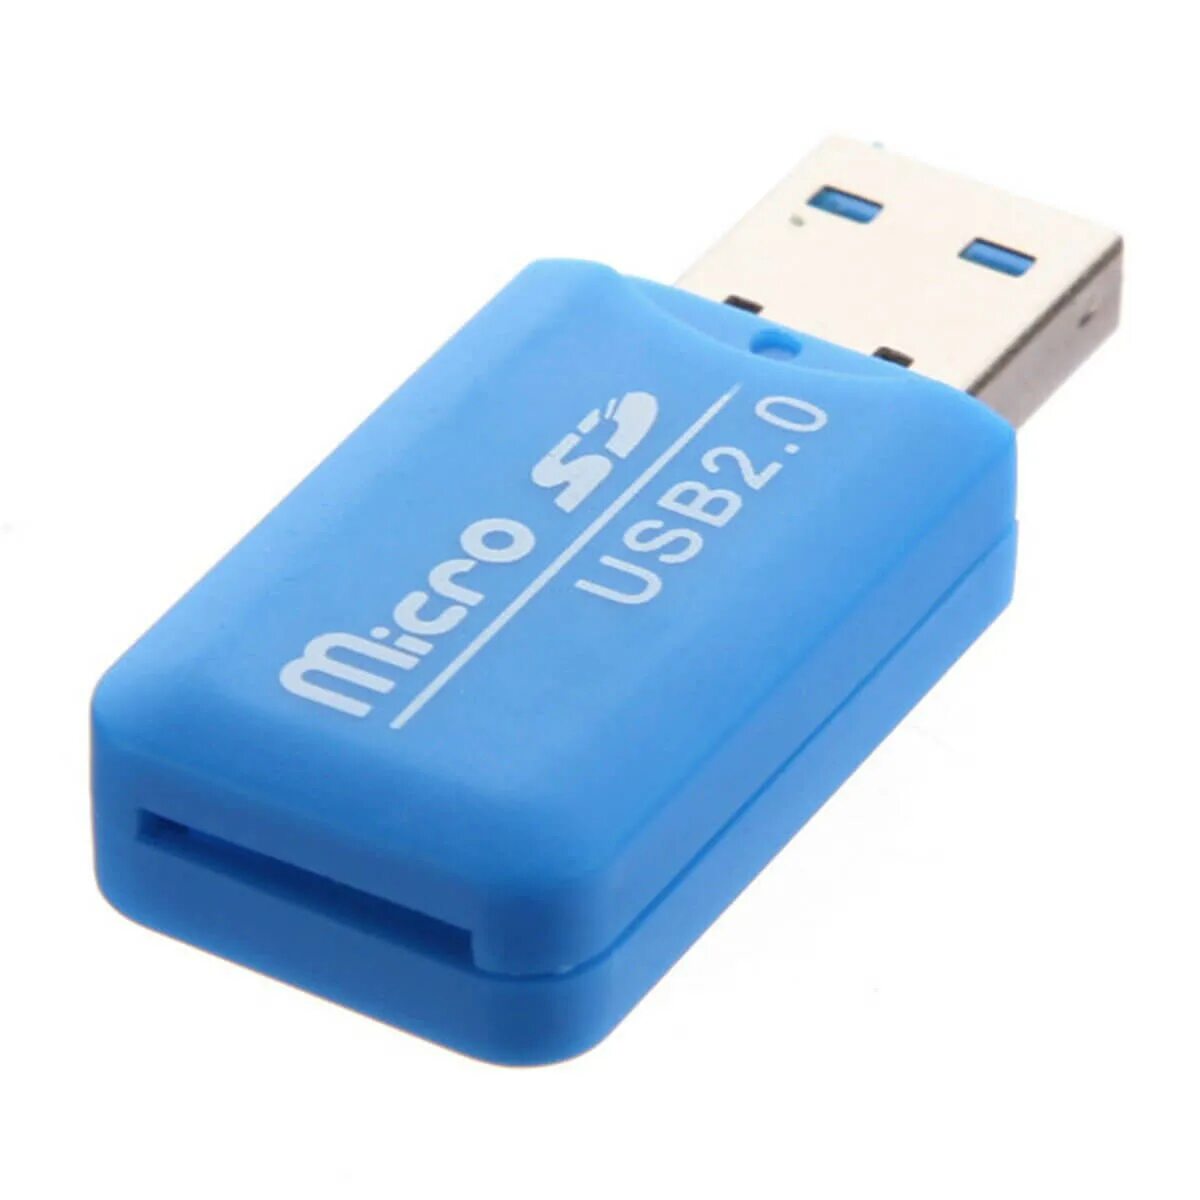 Адаптер USB 3.0 микро SD. Card Reader 2 SD 2 MICROSD. Адаптер микро SD карта TF кард-ридер USB. Картридер для микро SD USB 2.0.